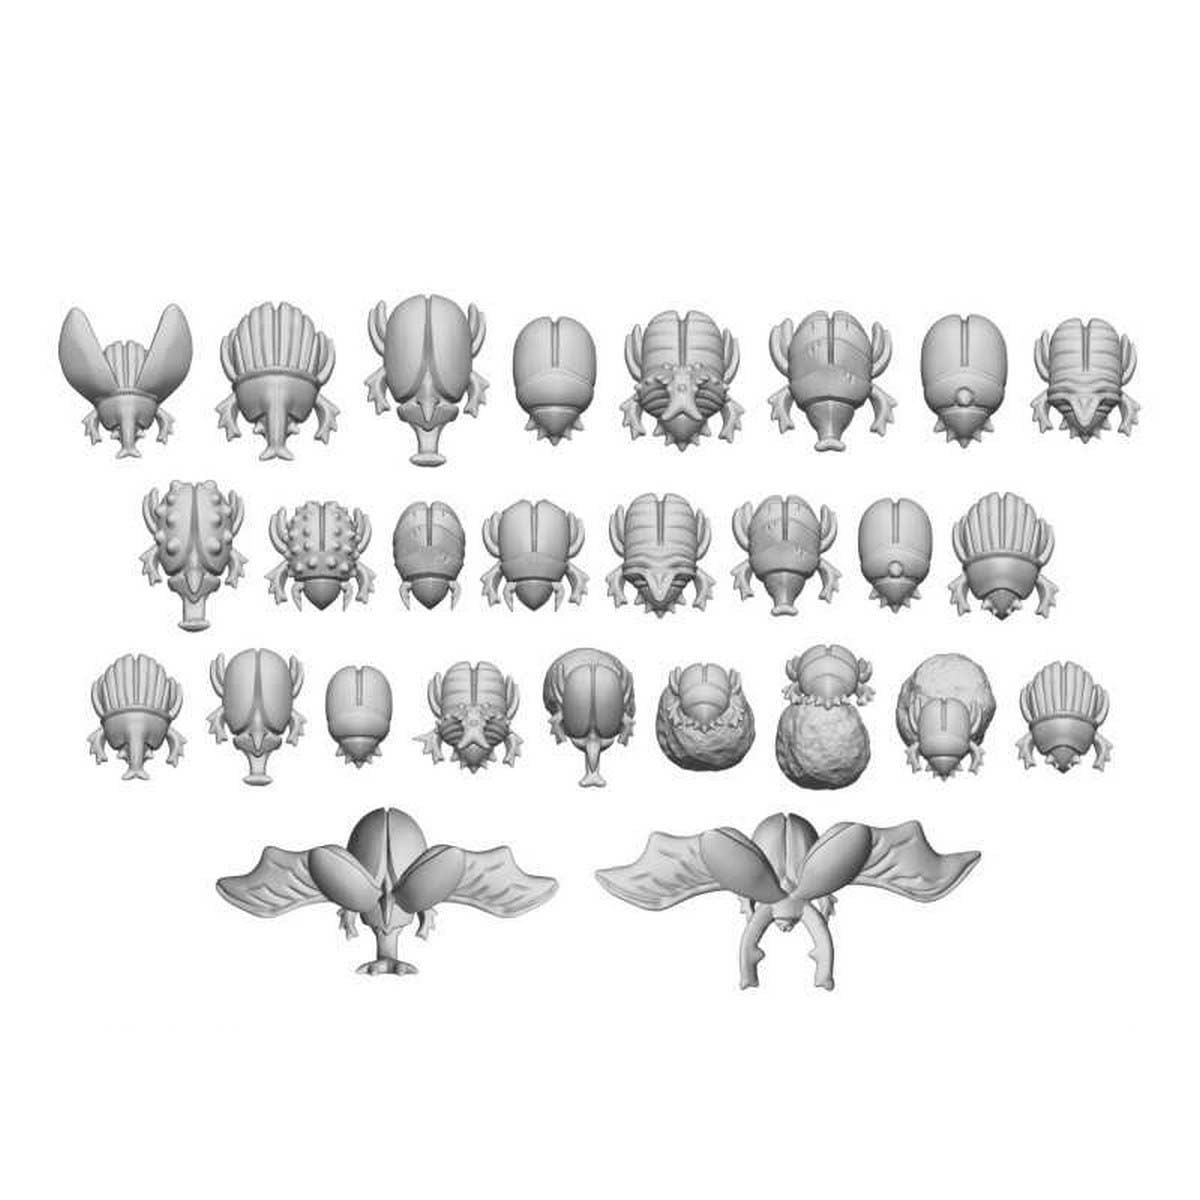 3D Printed Set - Egyptian Scarabs